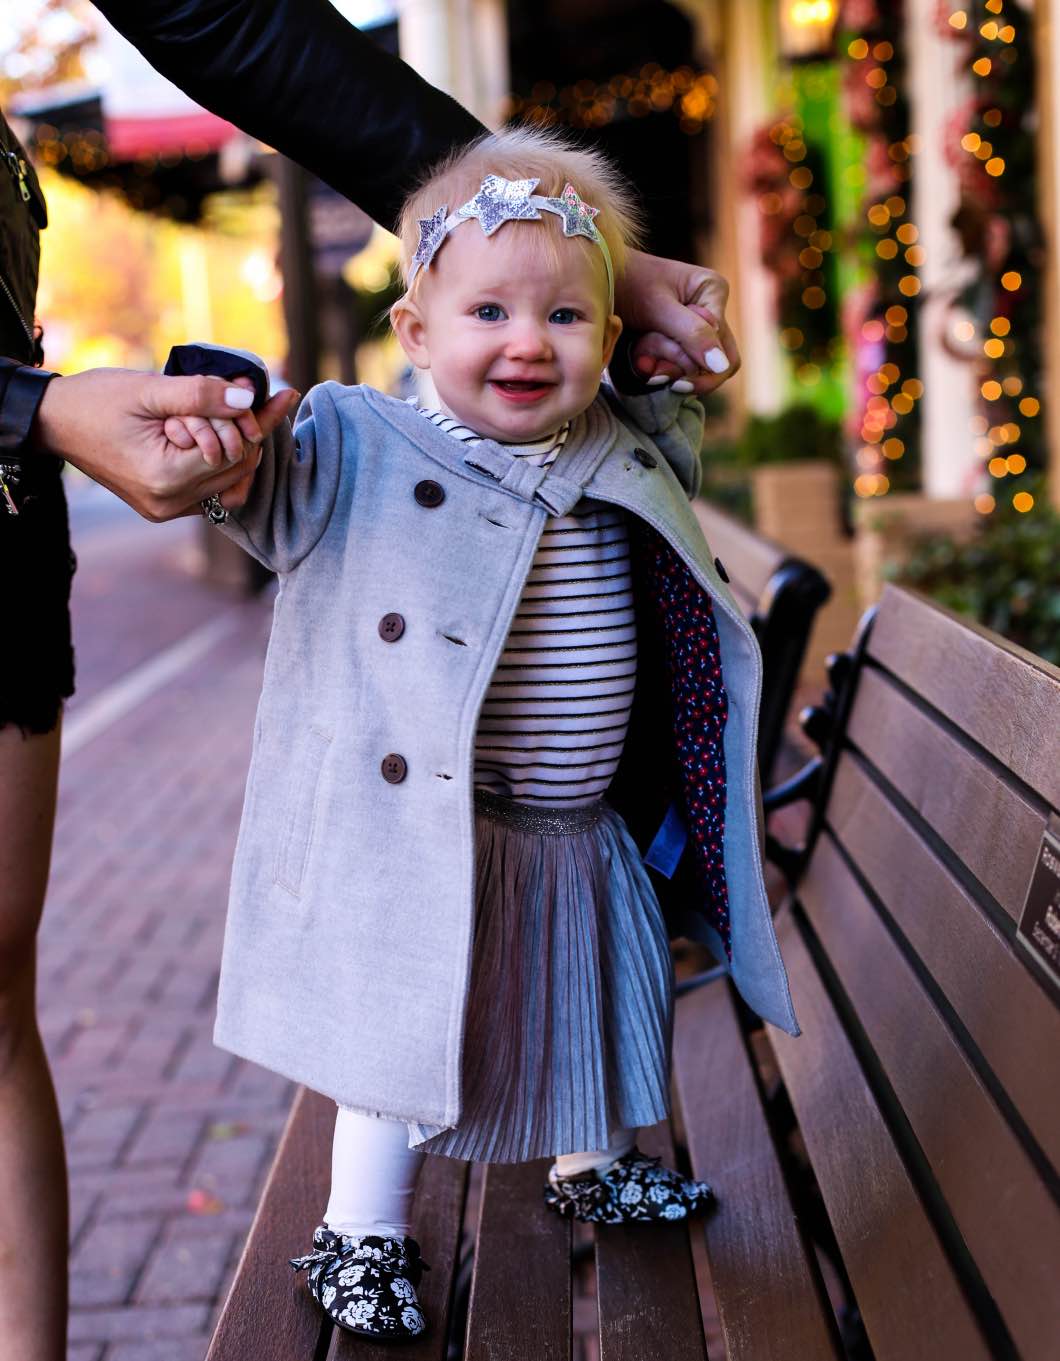 Baby Christmas Fashion OshKosh B'gosh - Baby and Toddler Holiday Outfits with OshKosh B'gosh by Atlanta style blogger Happily Hughes